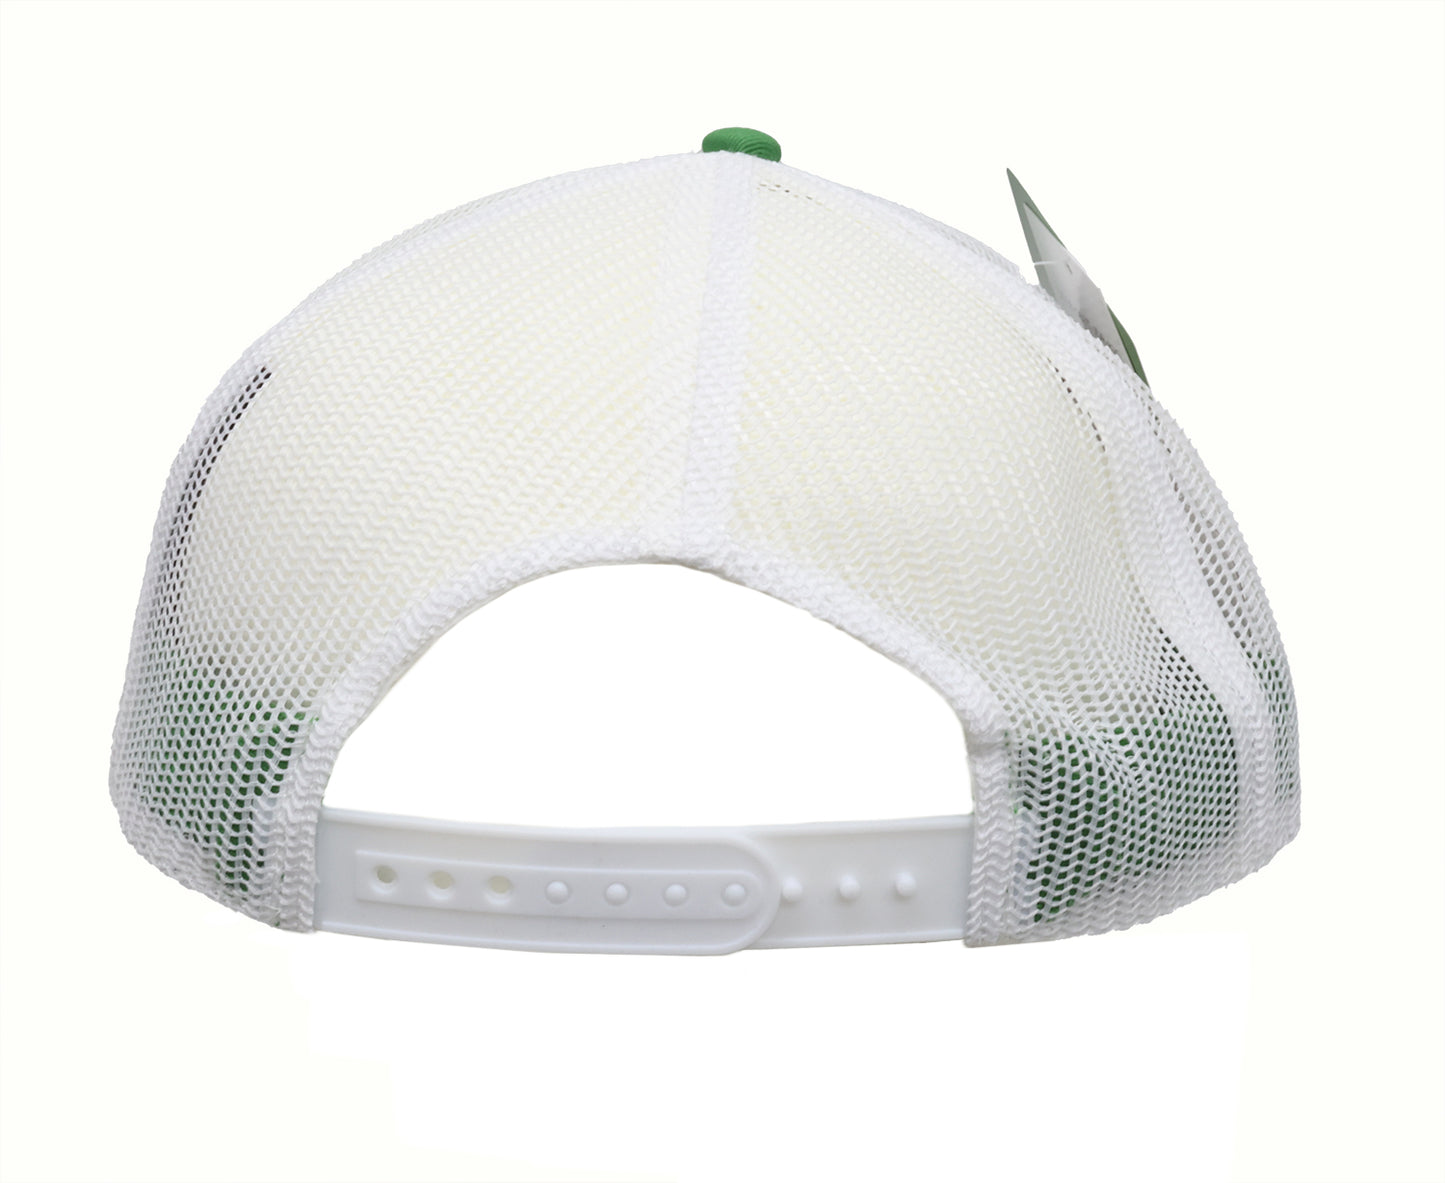 John Deere Men's Green/White Embro Cap/Hat - LP86112